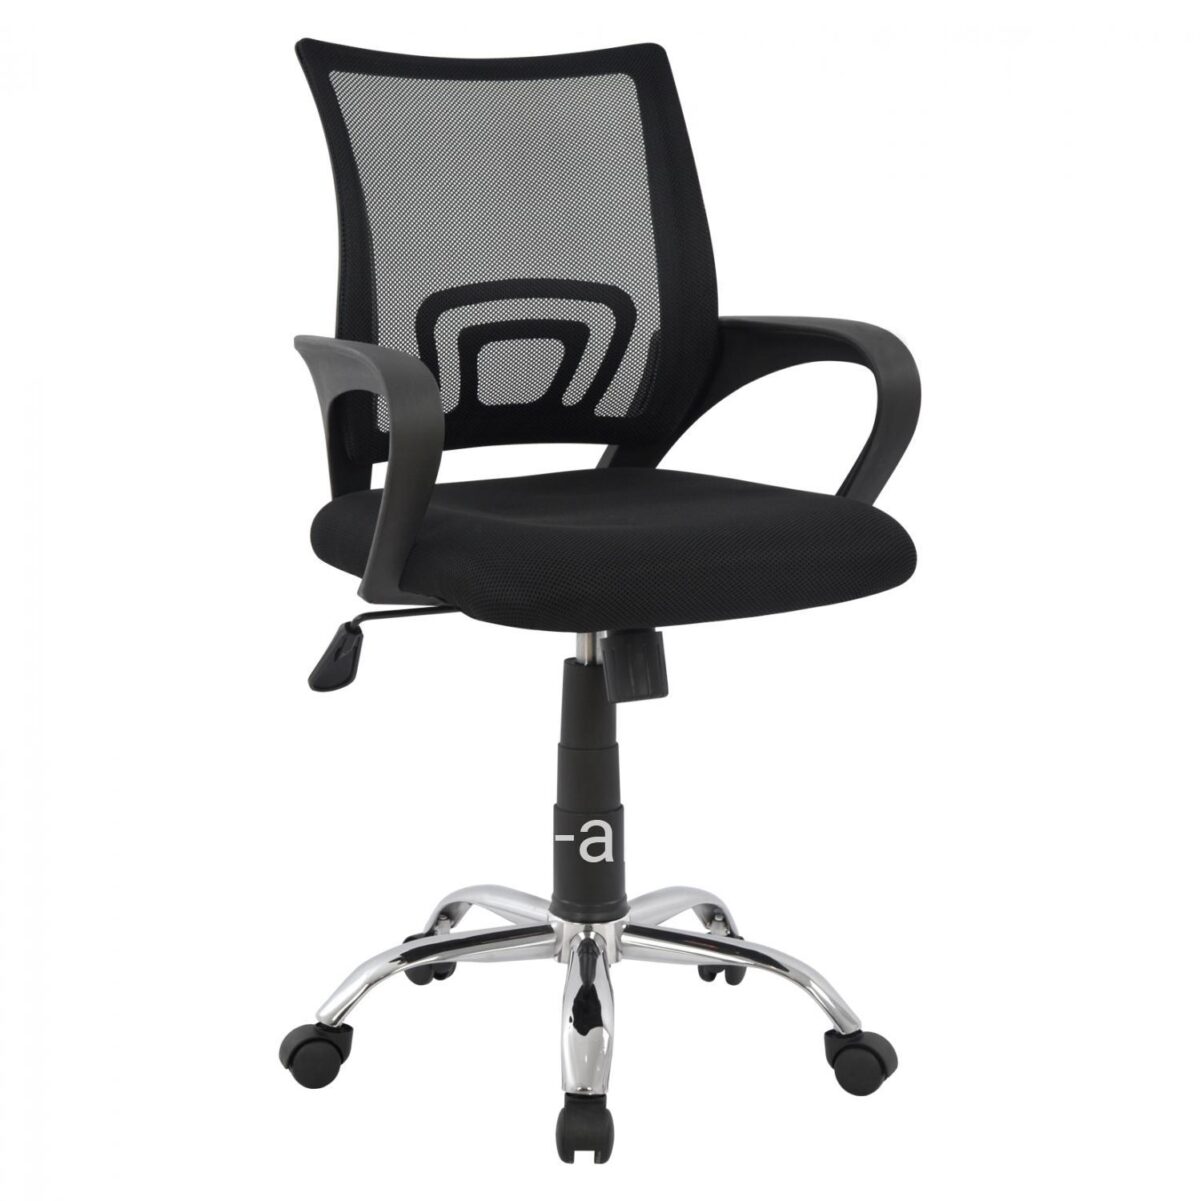 Office chairn with chromed base HM1058.01 Bristone Black 55x55x102 cm